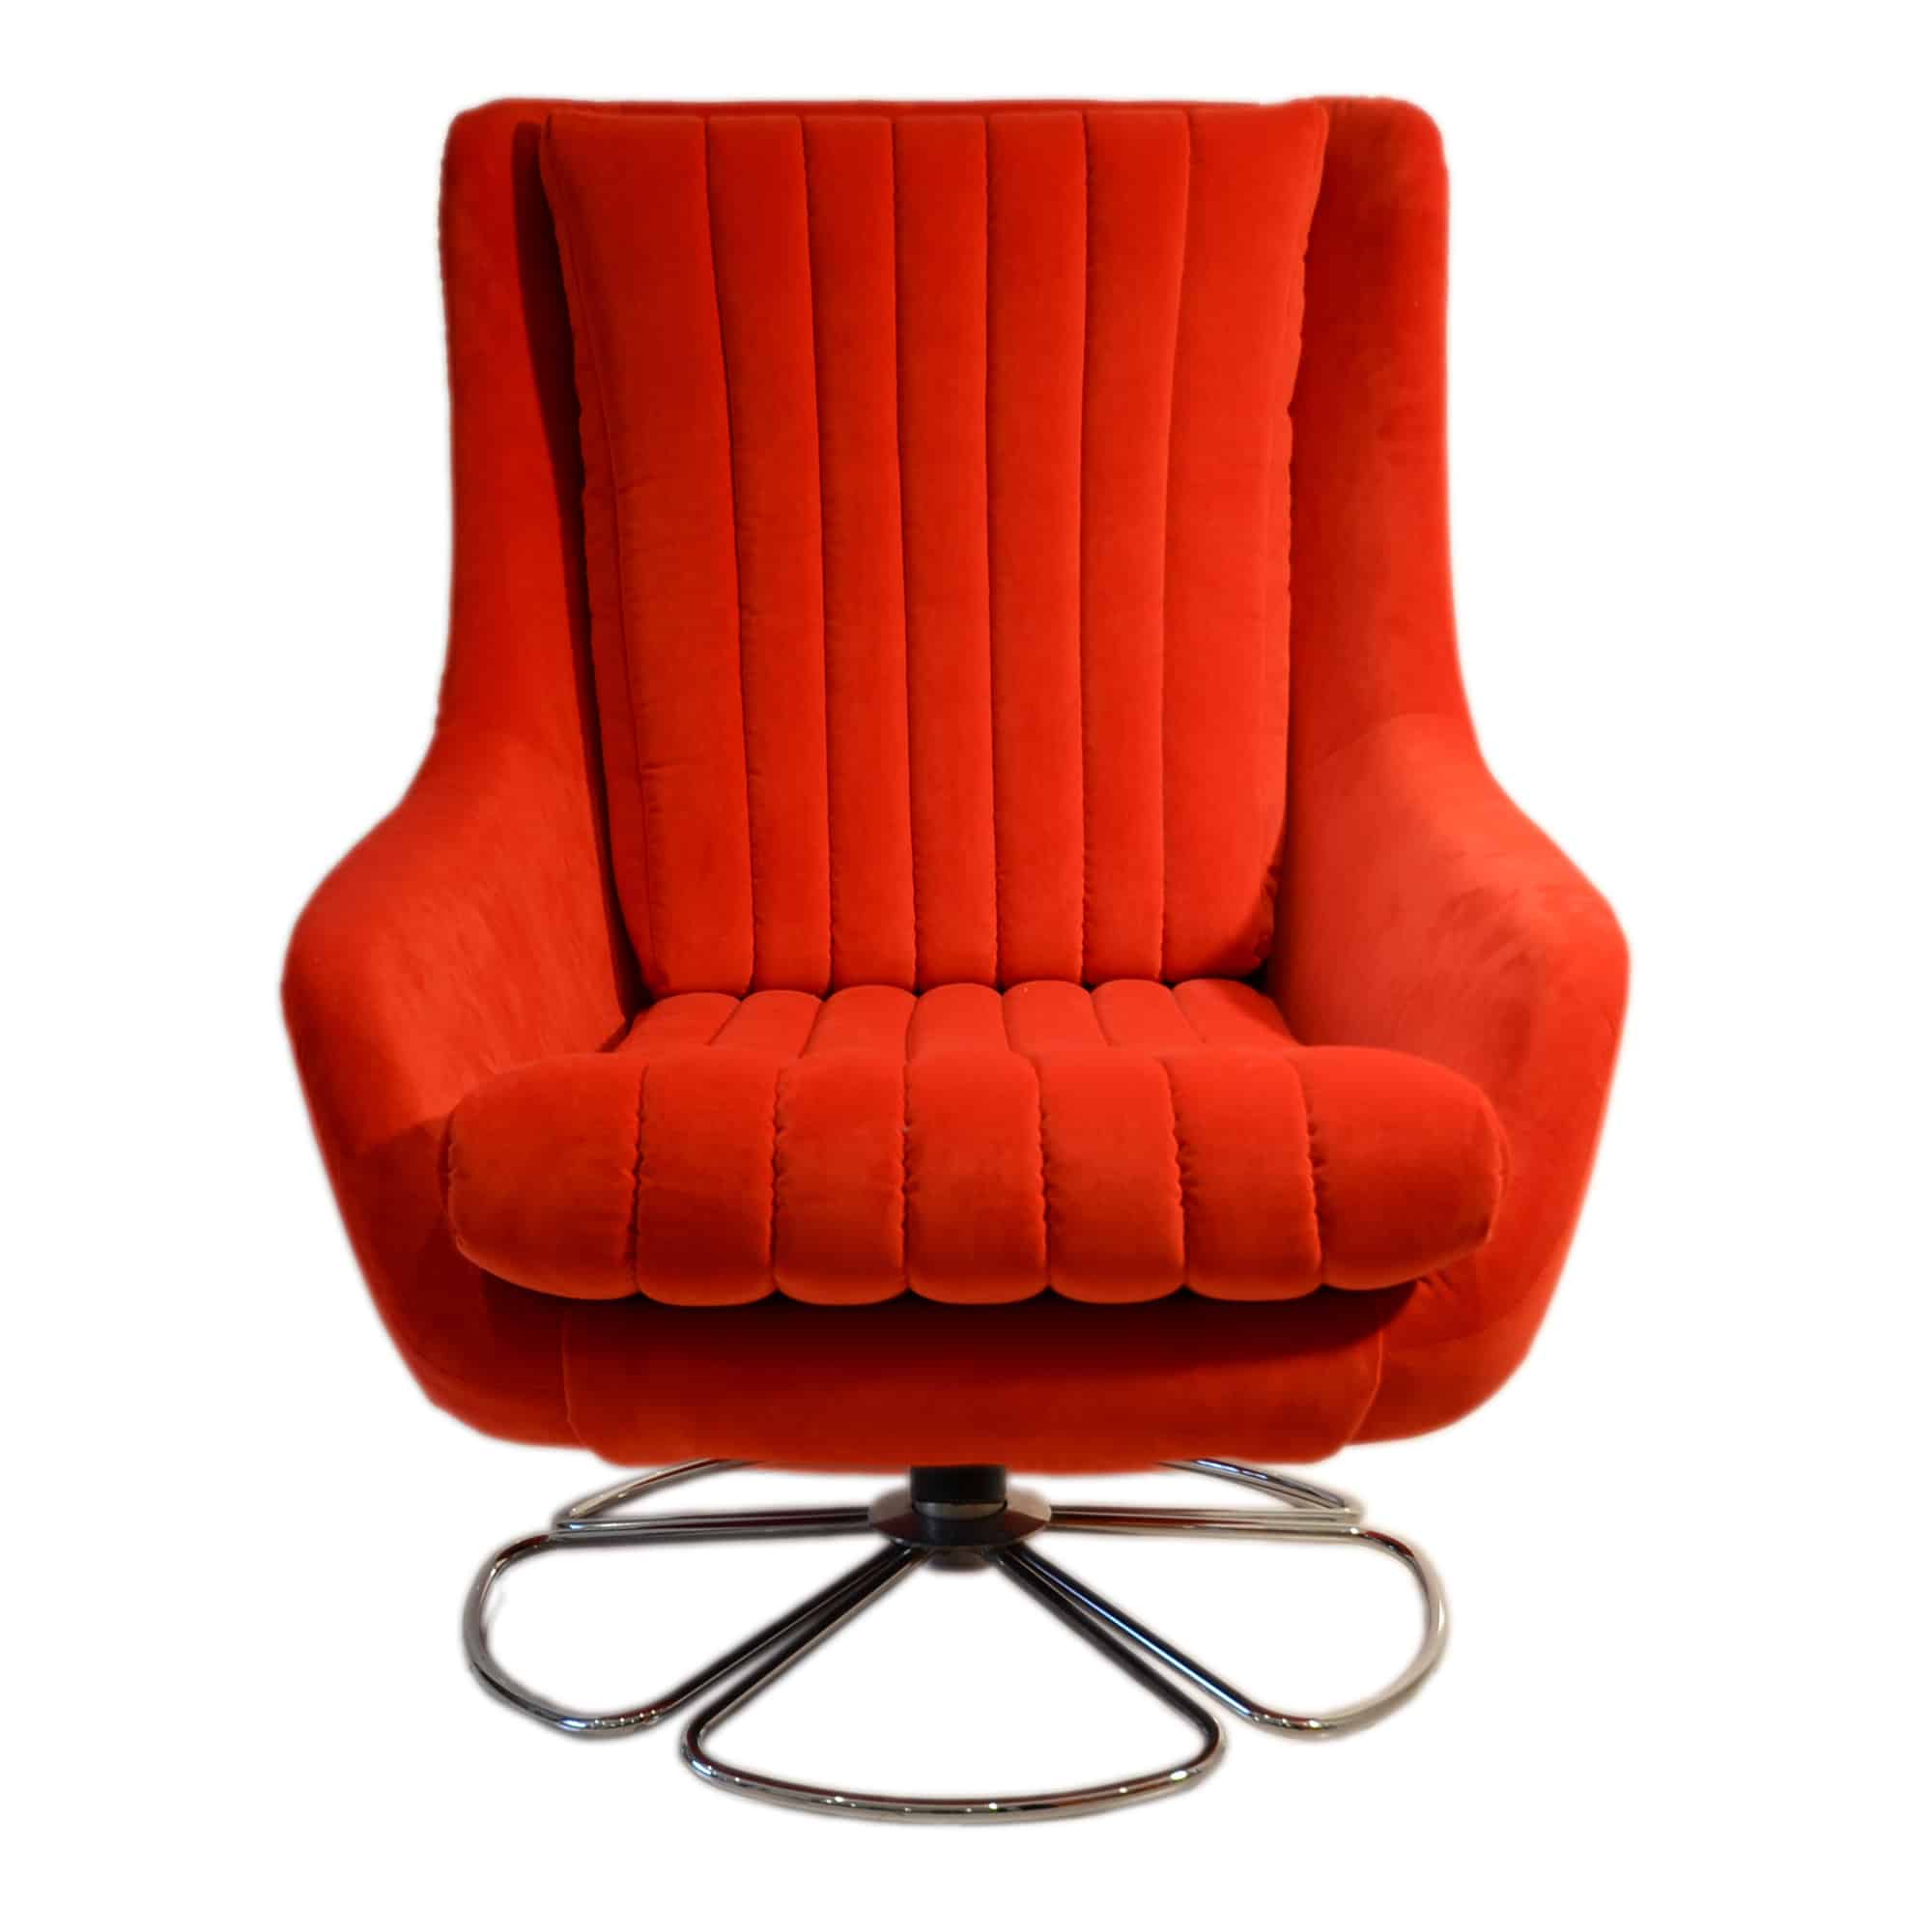 Portobello chair red front view shop alsans